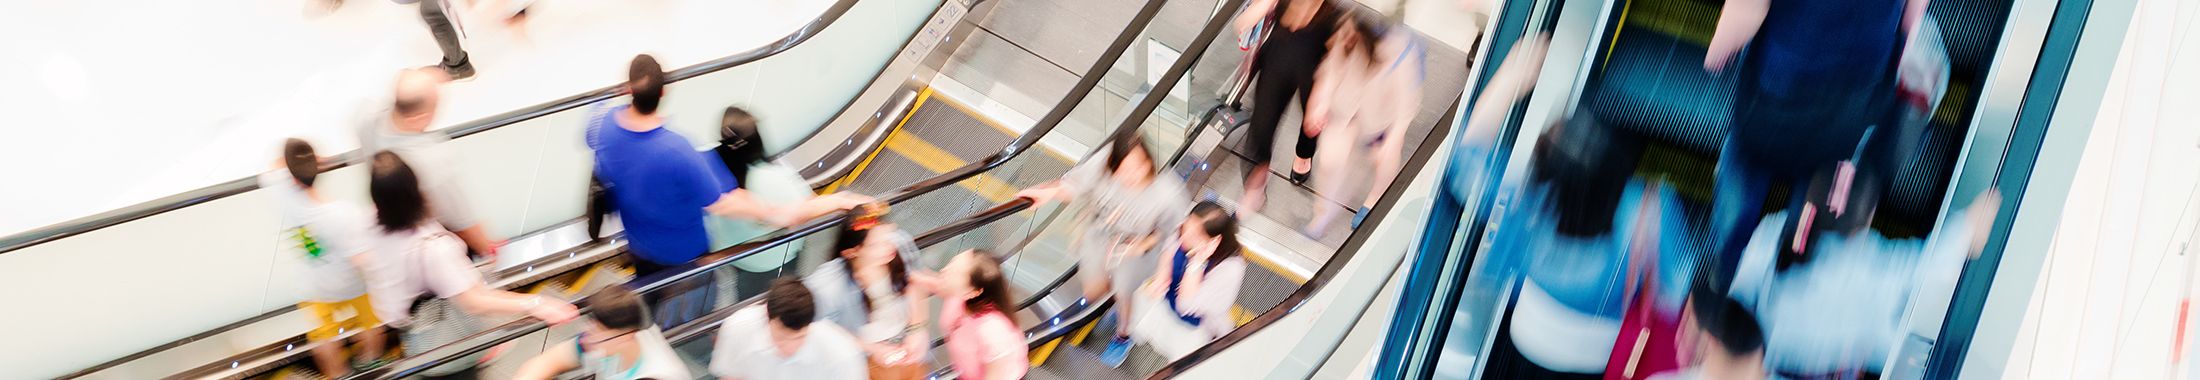 Blurred photo of shoppers on escalators